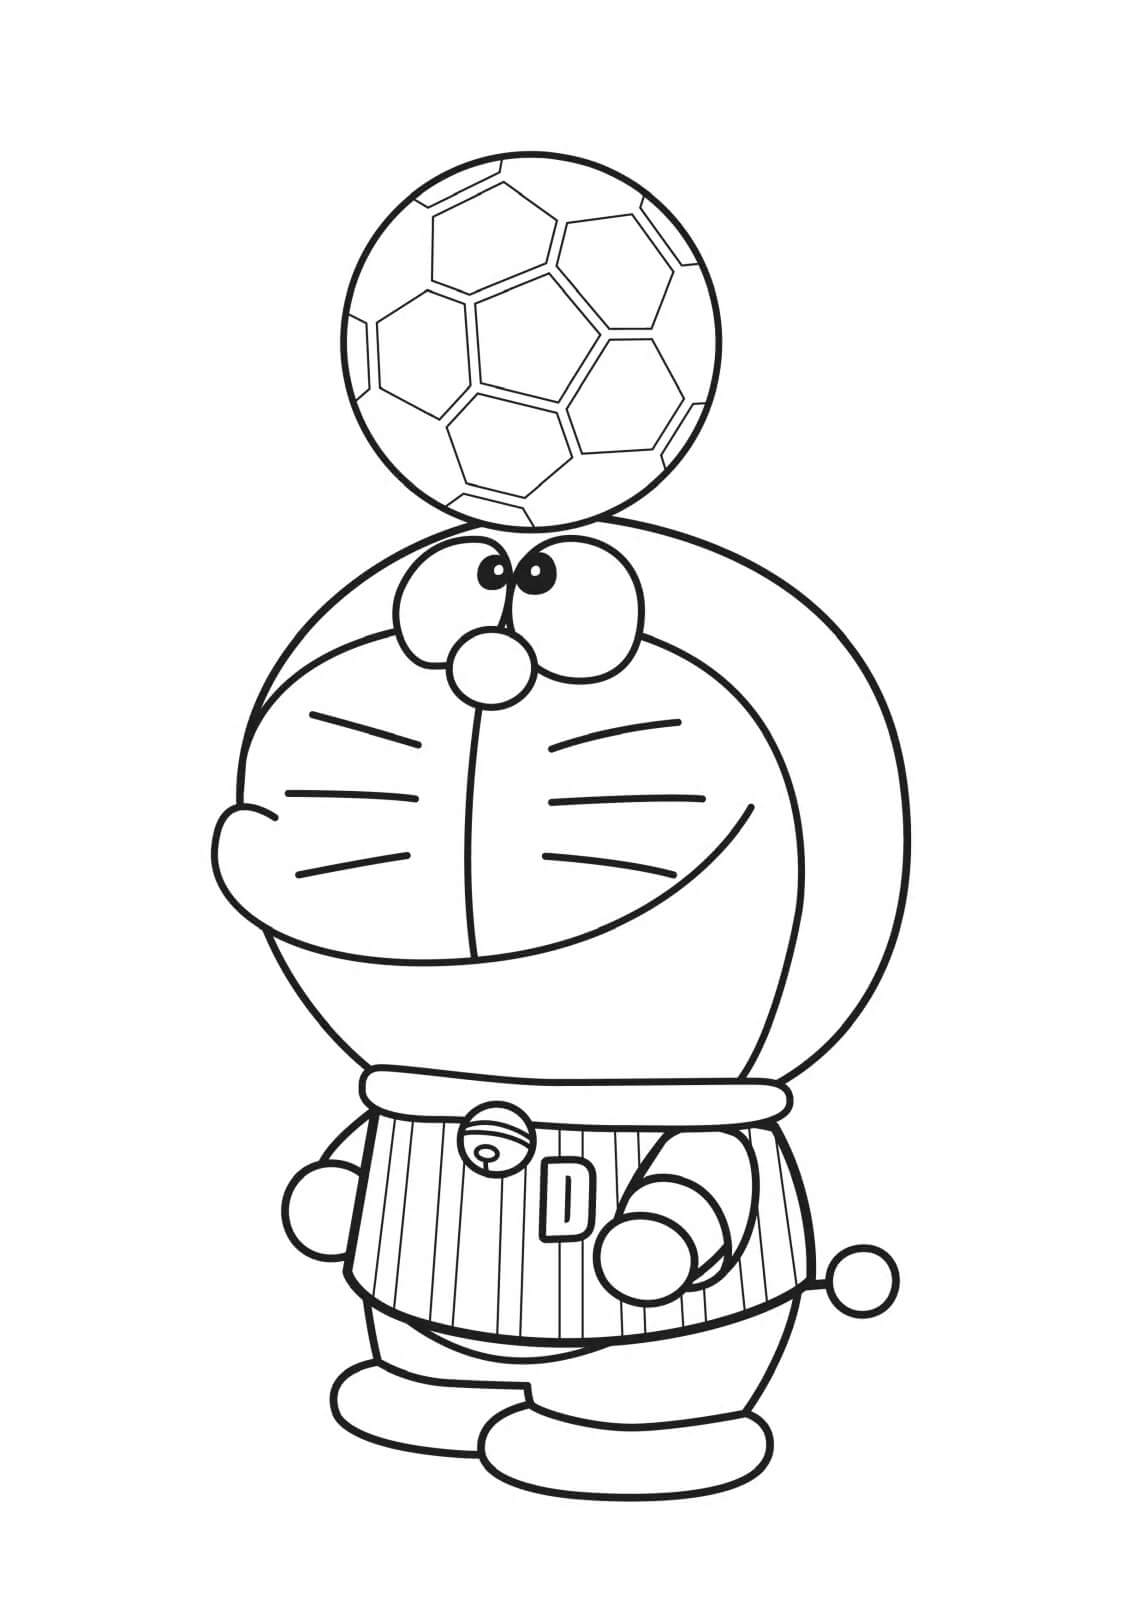 Doraemon Jogando Futebol para colorir